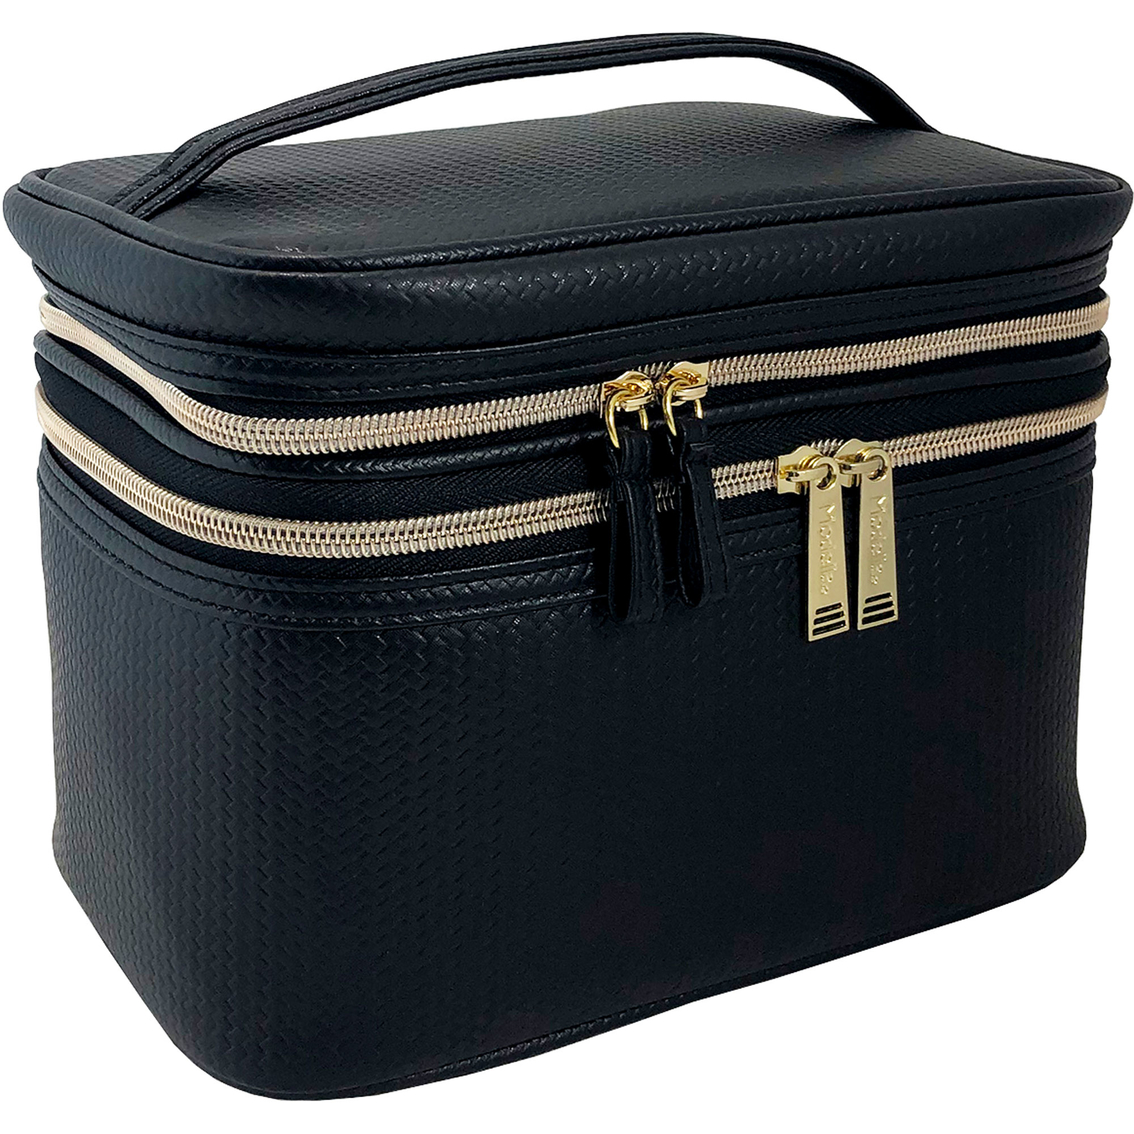 Allegro Modella Basketweave Train Case 5 Pc. Set | Cosmetic Bags ...